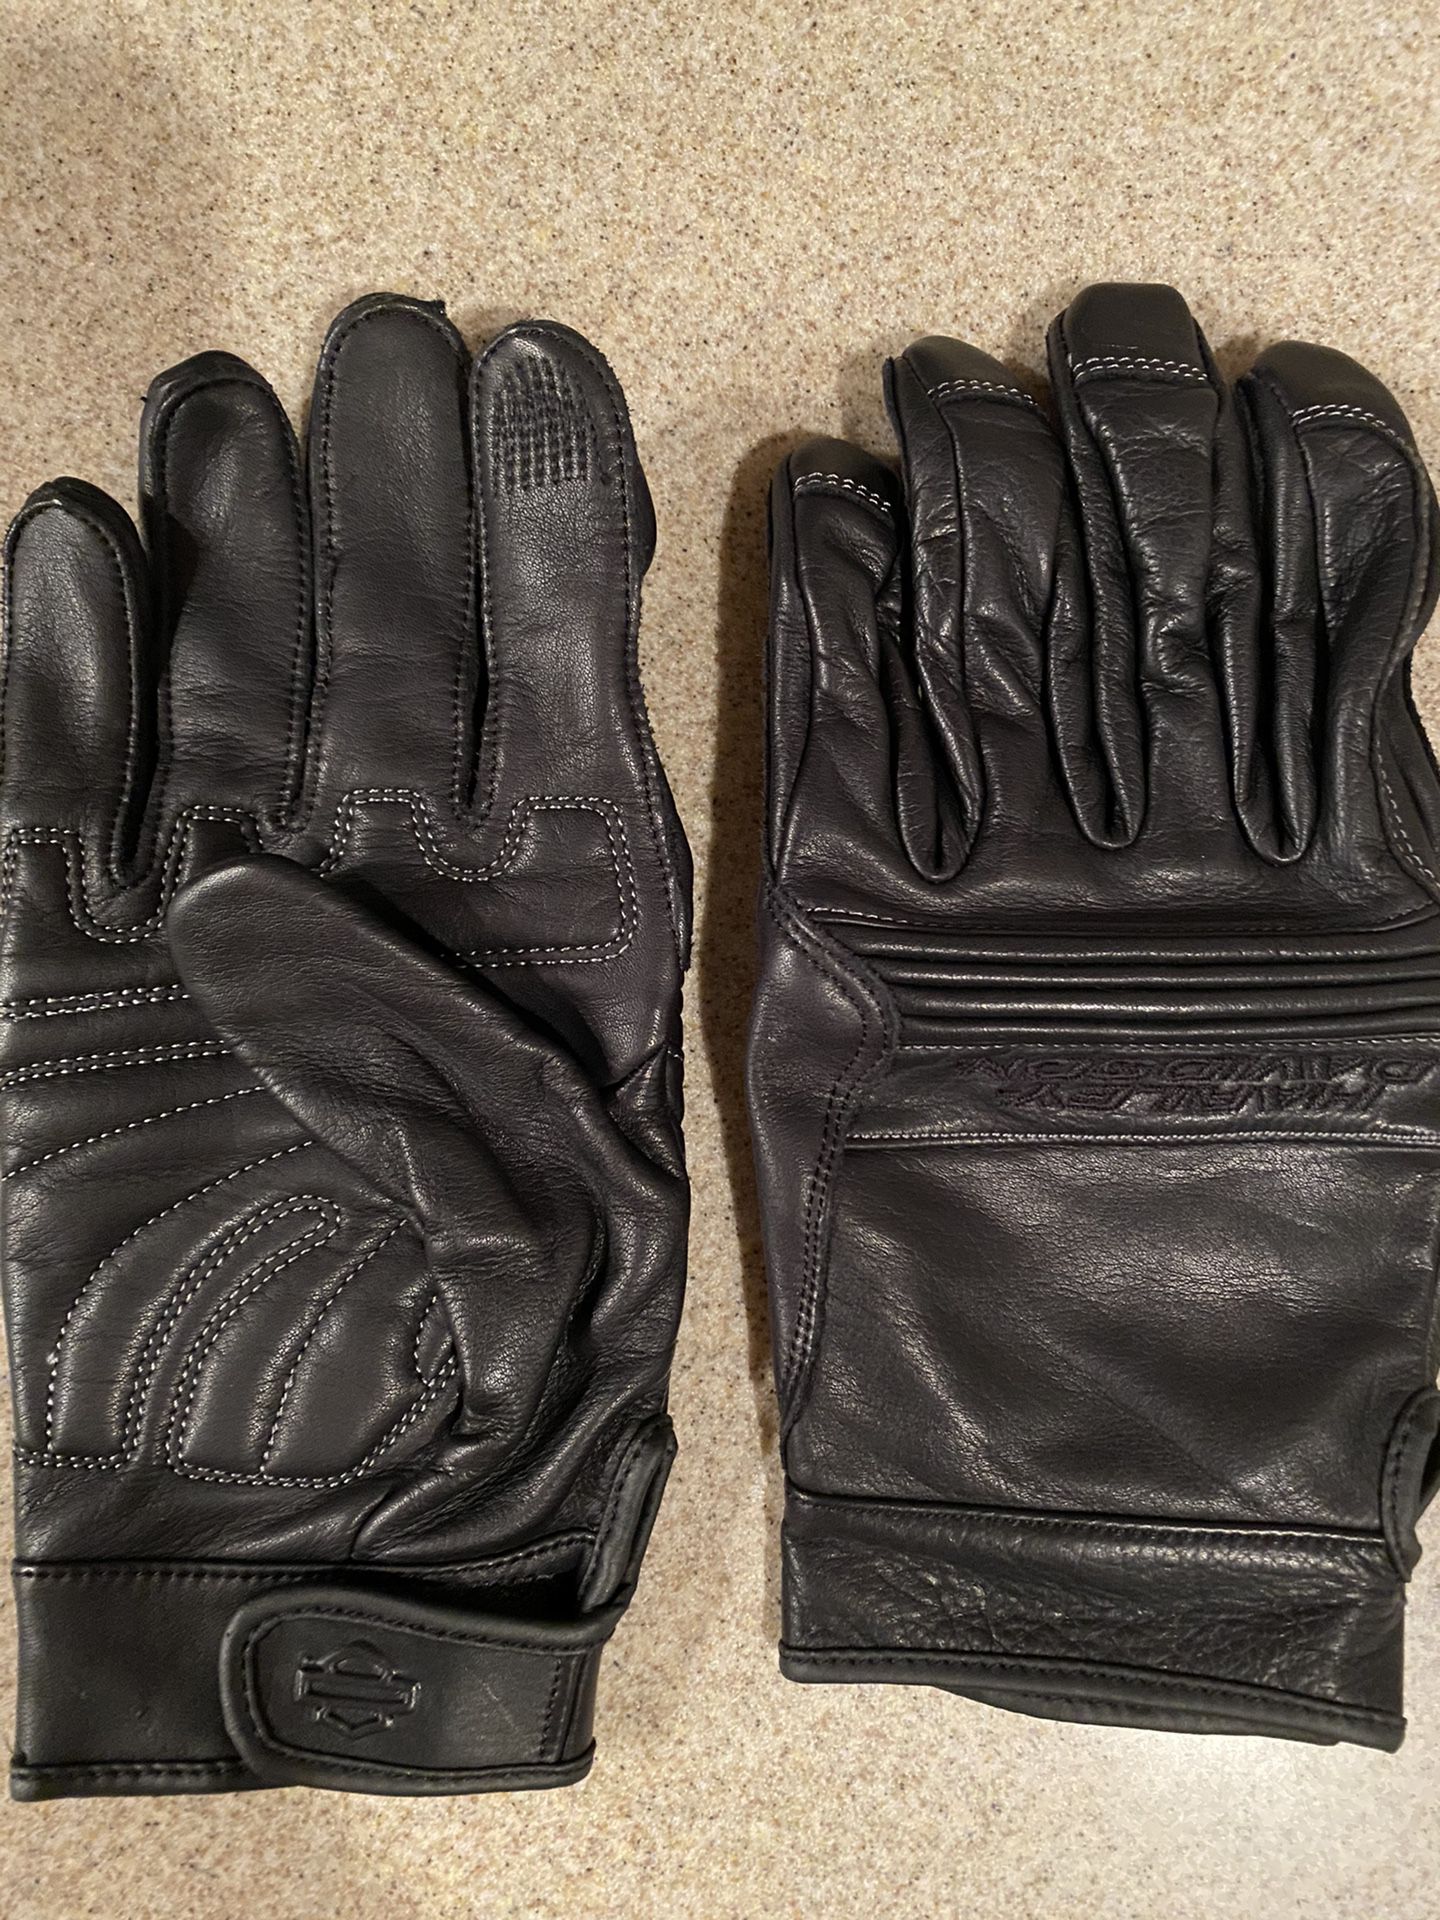 Harley Davison motorcycle leather gloves